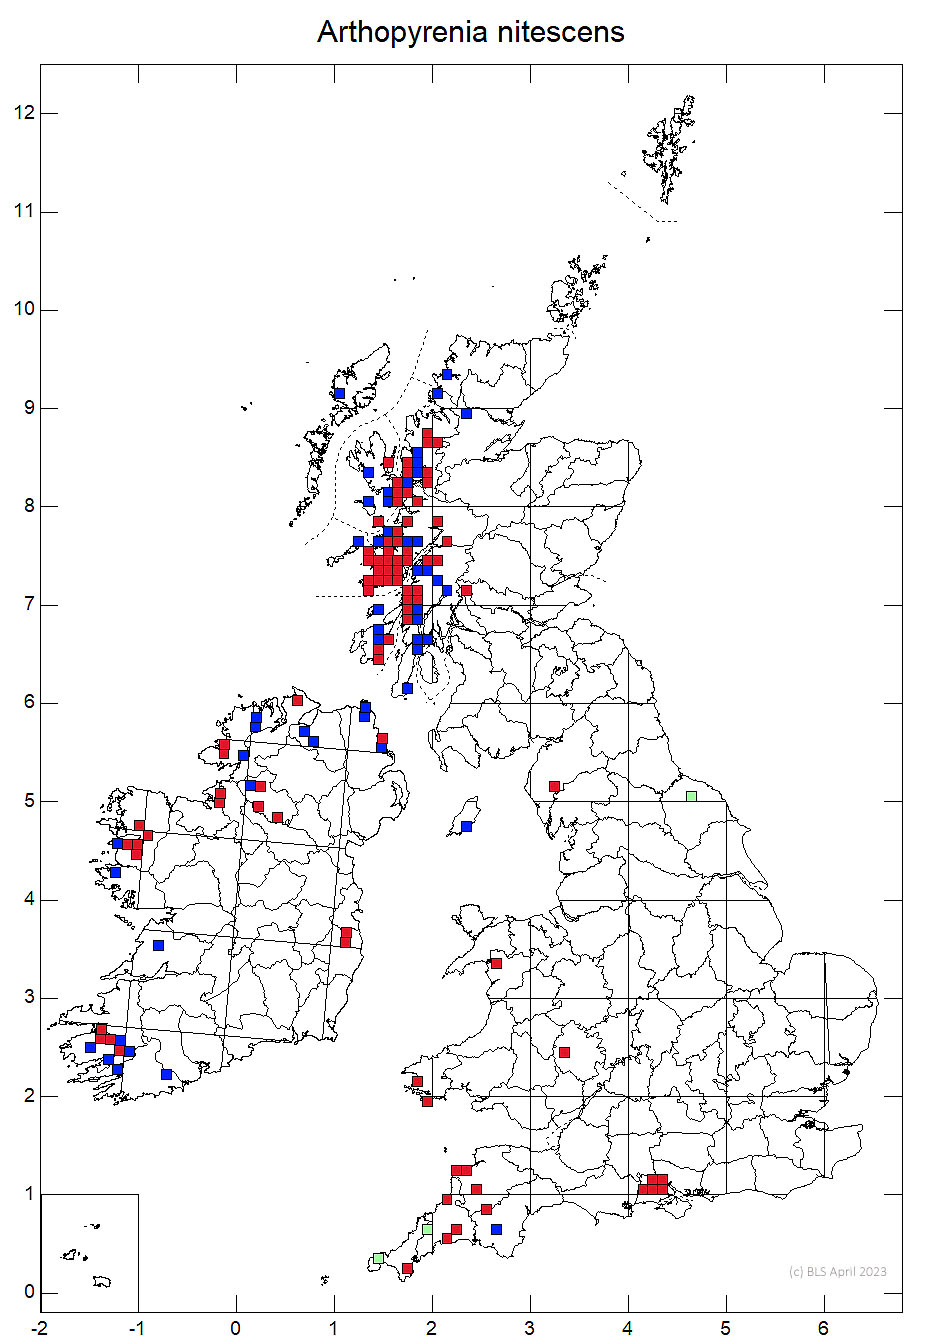 Arthopyrenia nitescens 10km sq distribution map